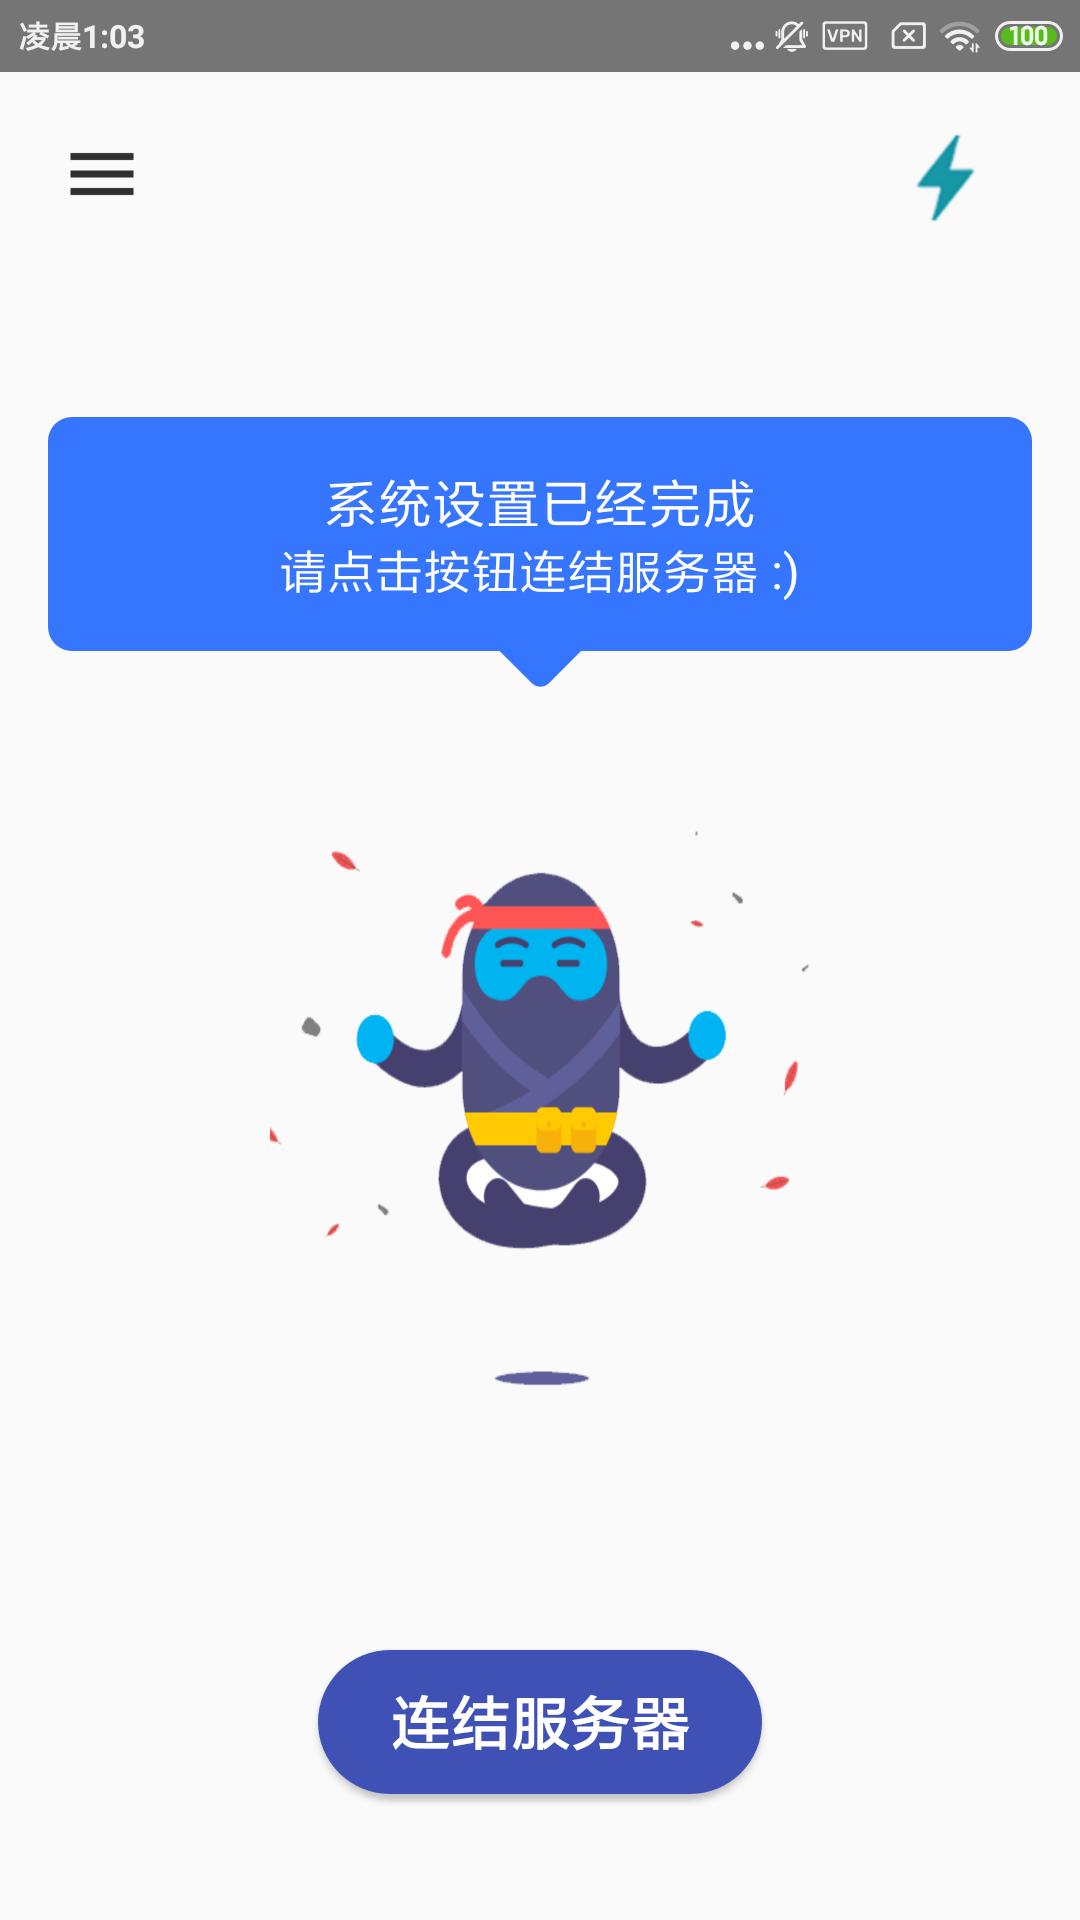 Бомж впн на андроид. Значок впн на андроид. VPN для андроид с птицей на логотипе. Troywell VPN Android. VPN APK Android China с лого медведа.